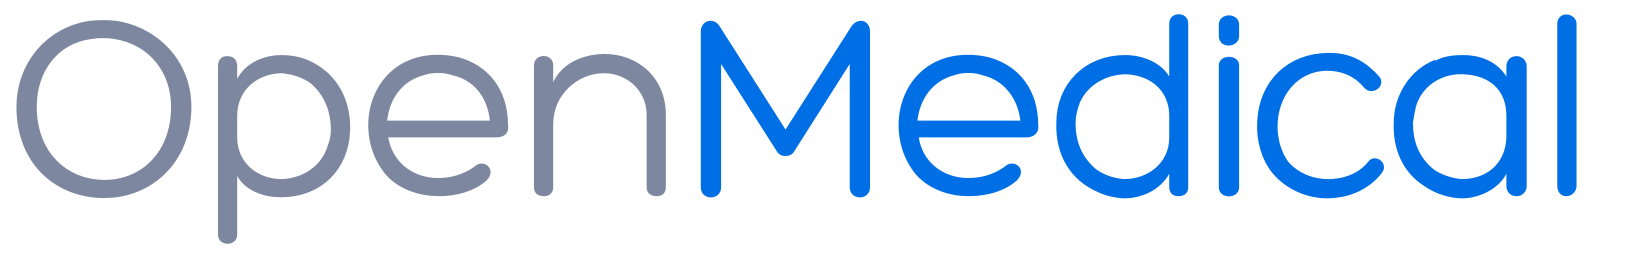 om logo 1